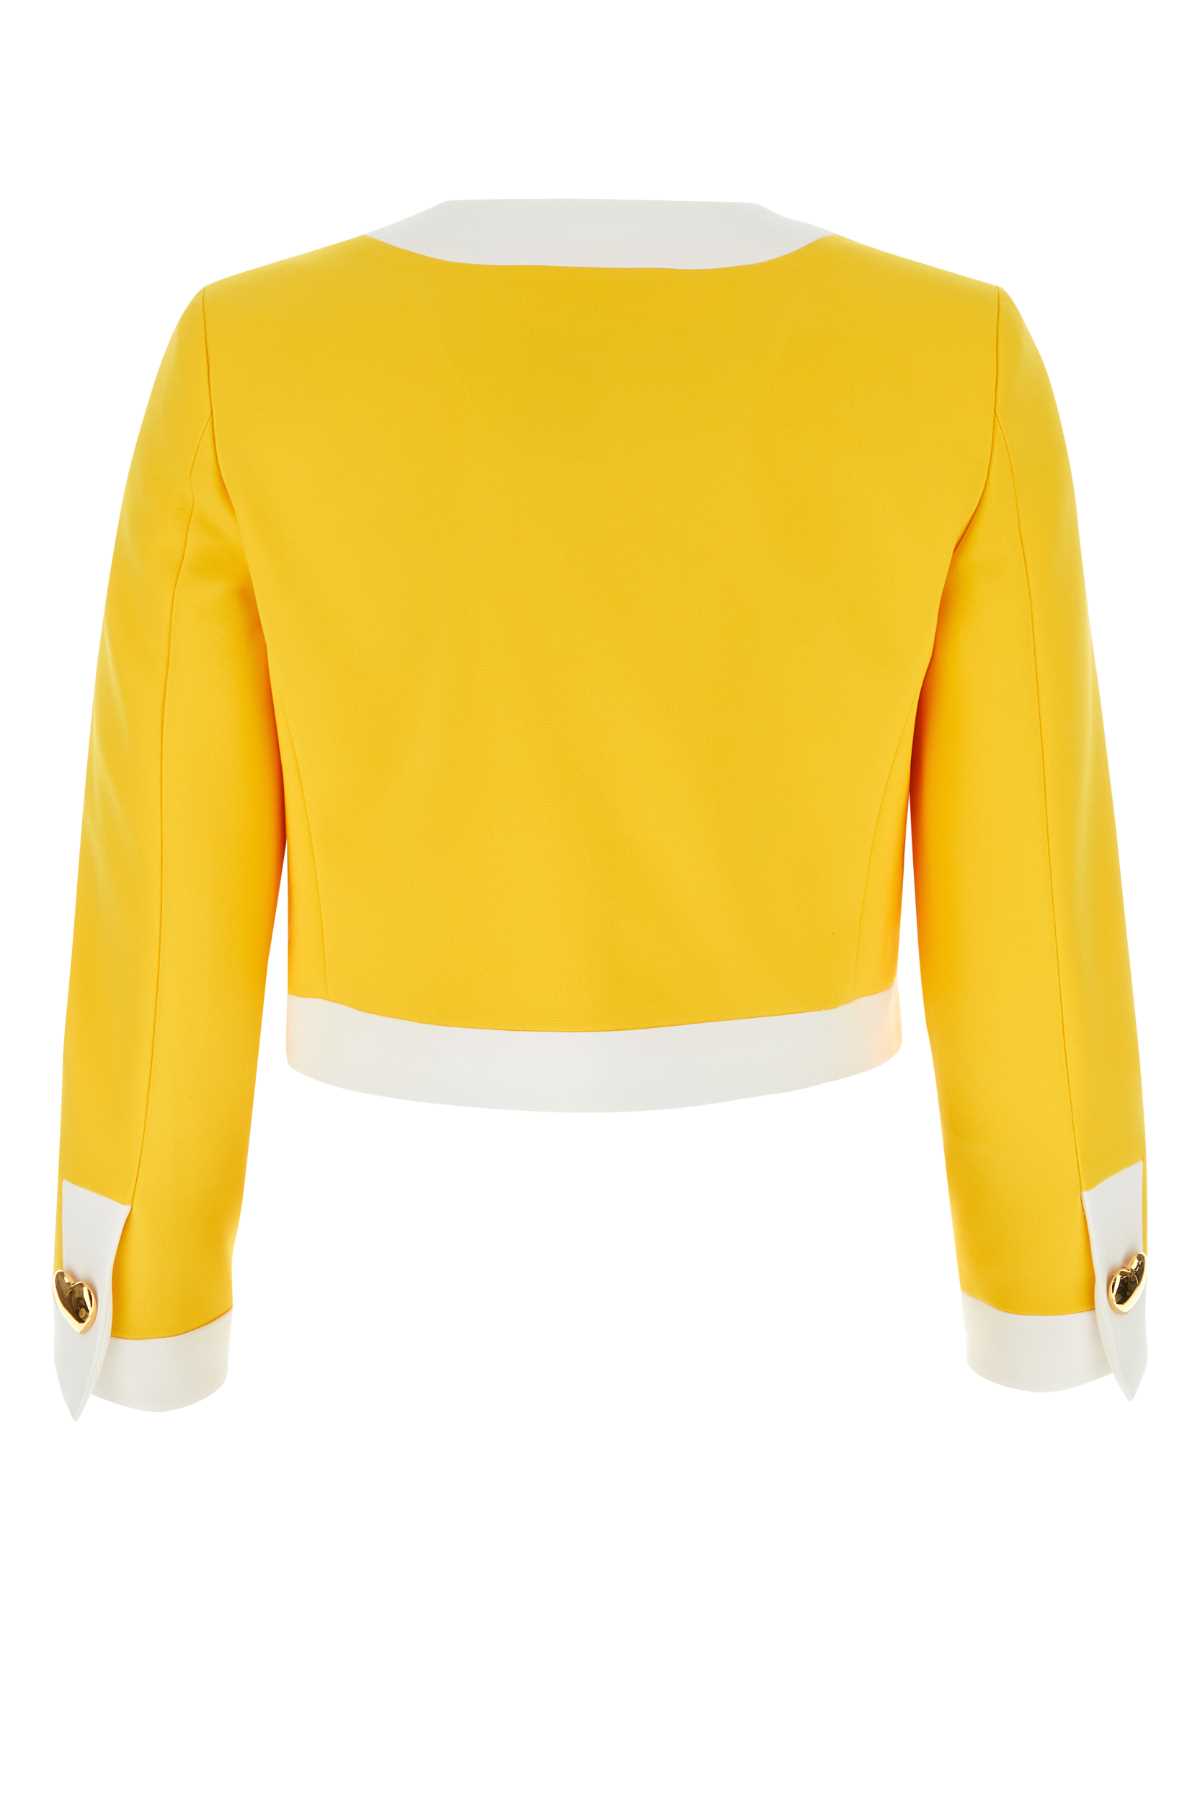 Moschino Yellow Stretch Jersey Blazer In Fantasiagiallo